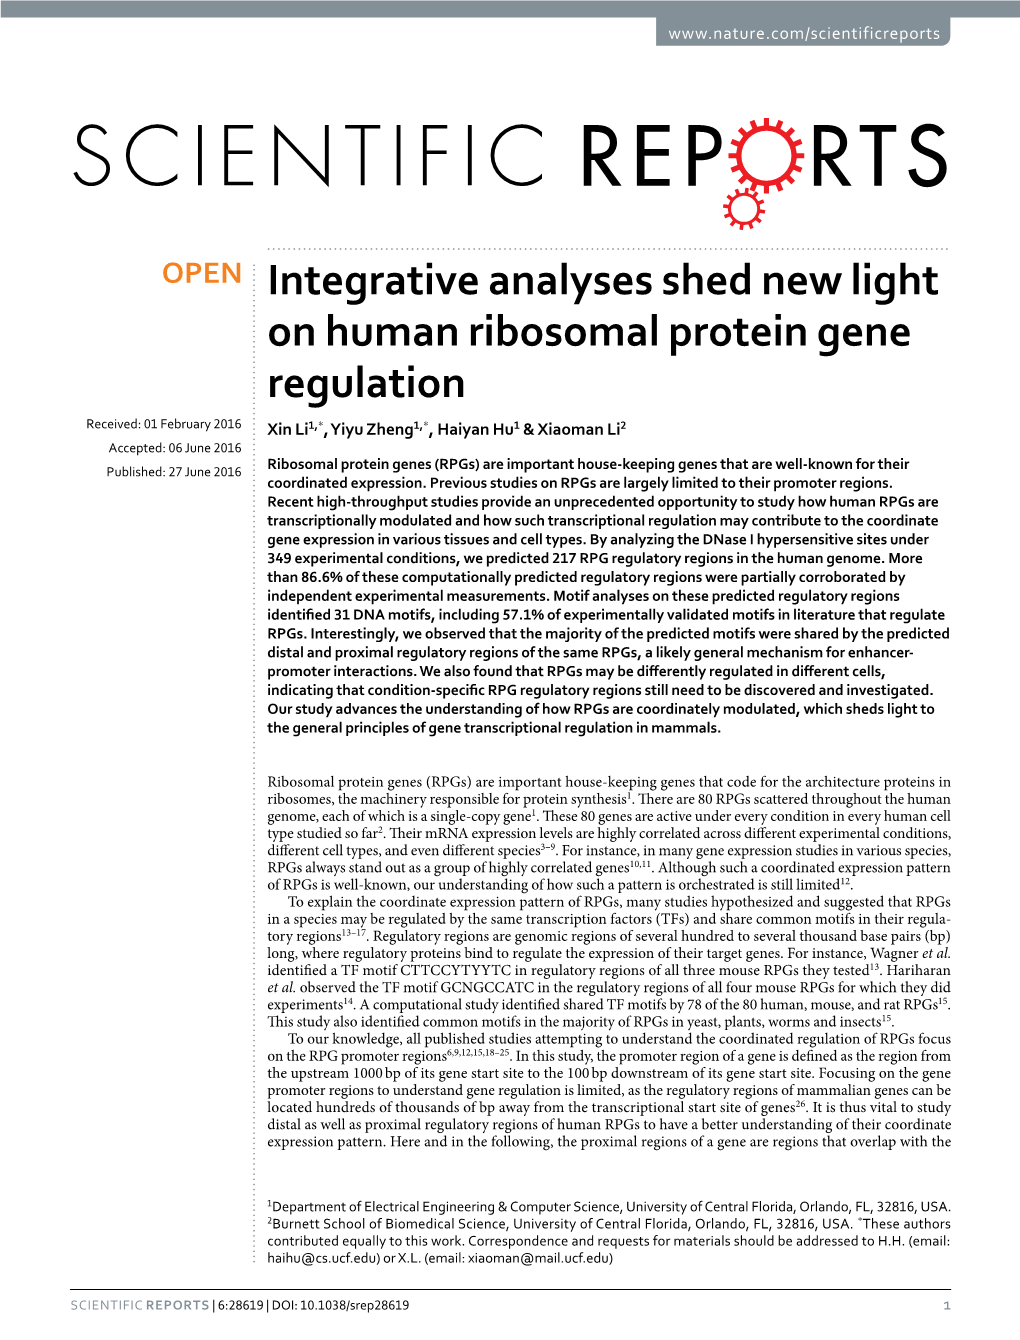 Integrative Analyses Shed New Light on Human Ribosomal Protein Gene